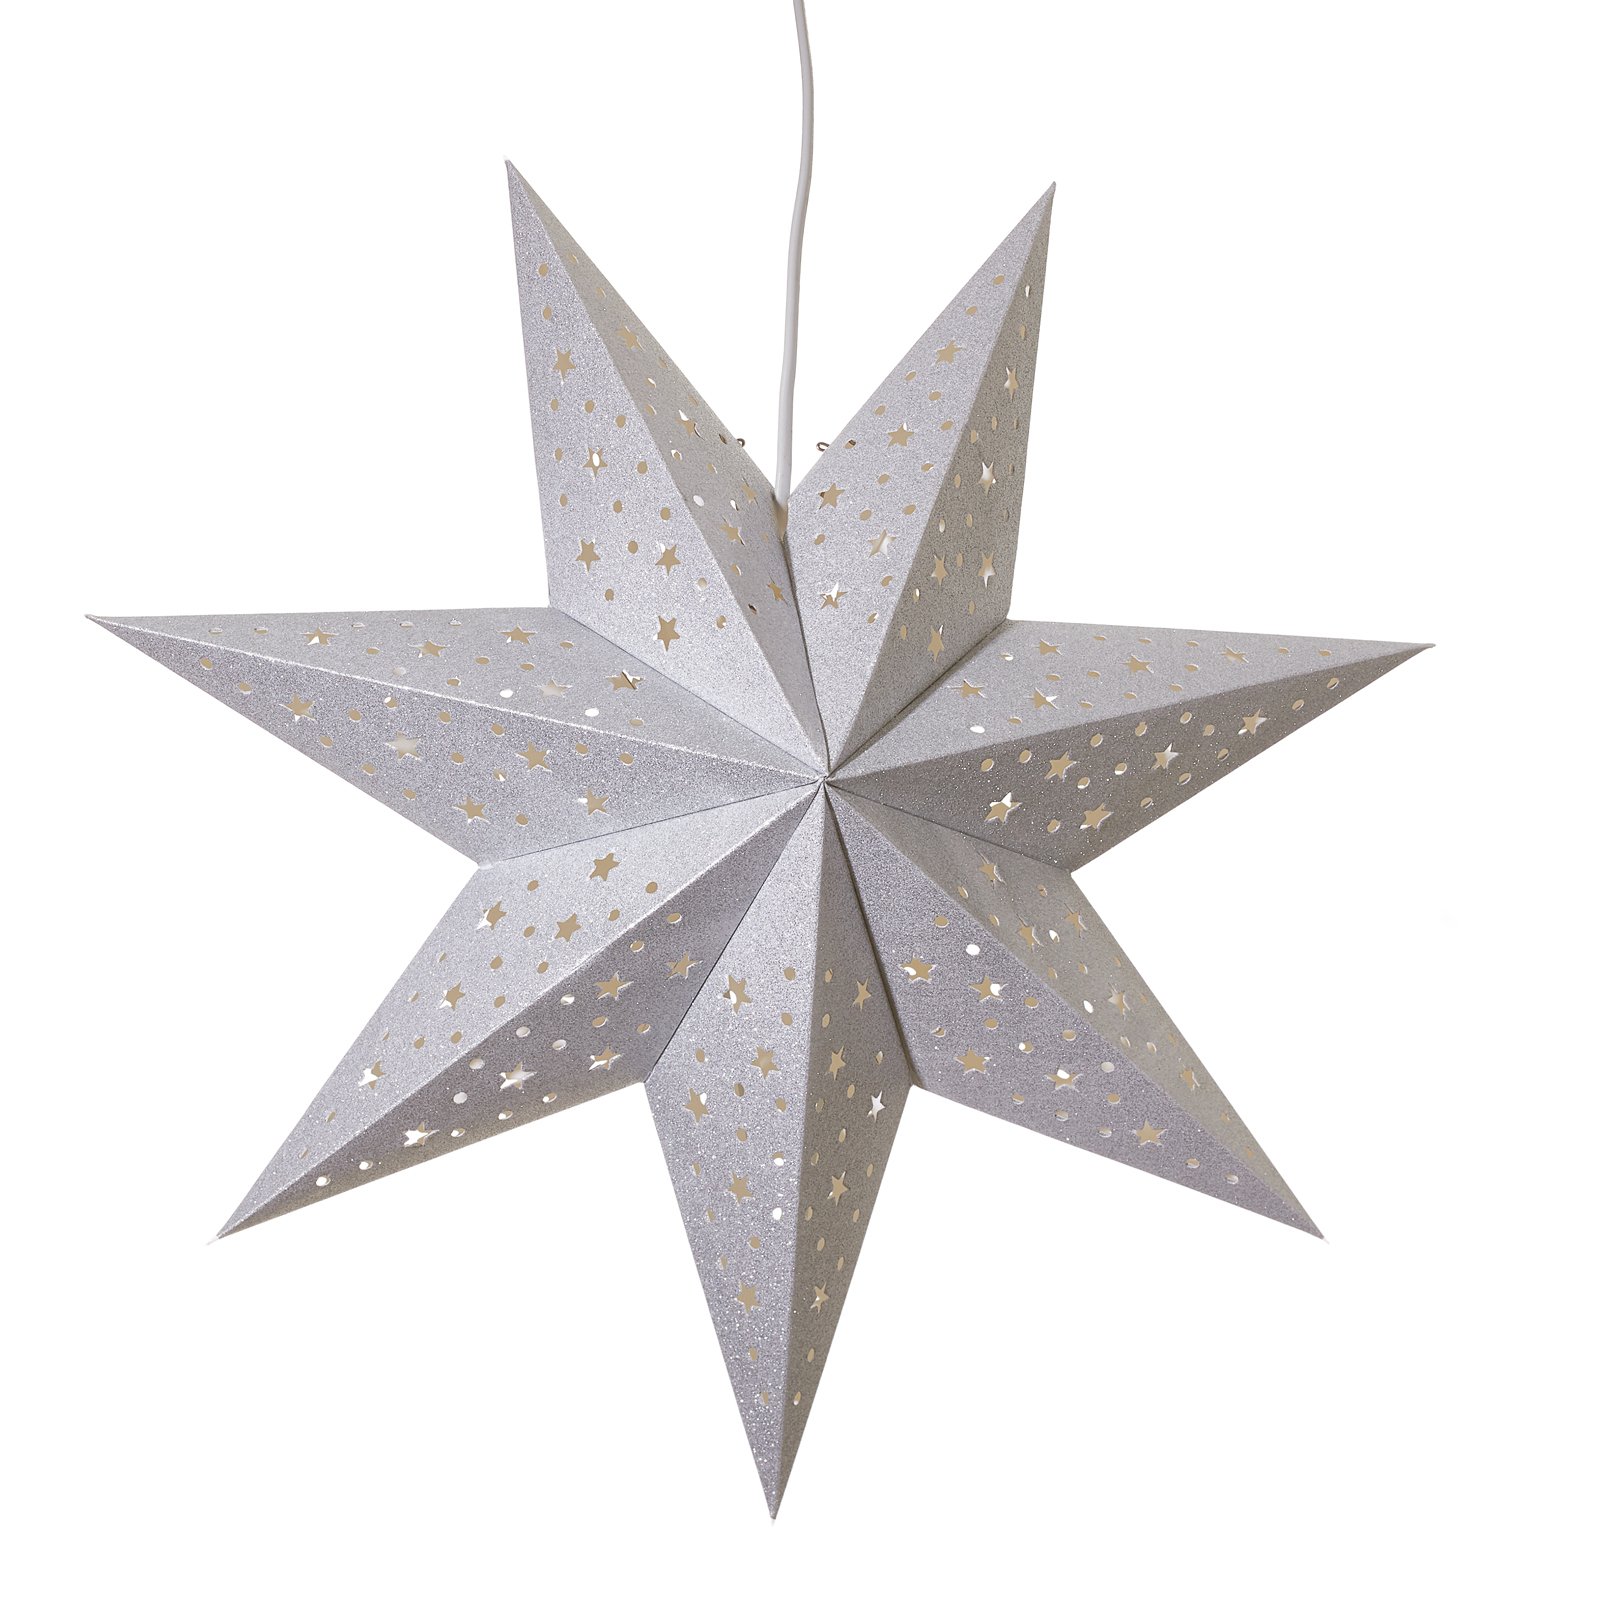 Striking star Solvalla 45 cm silver